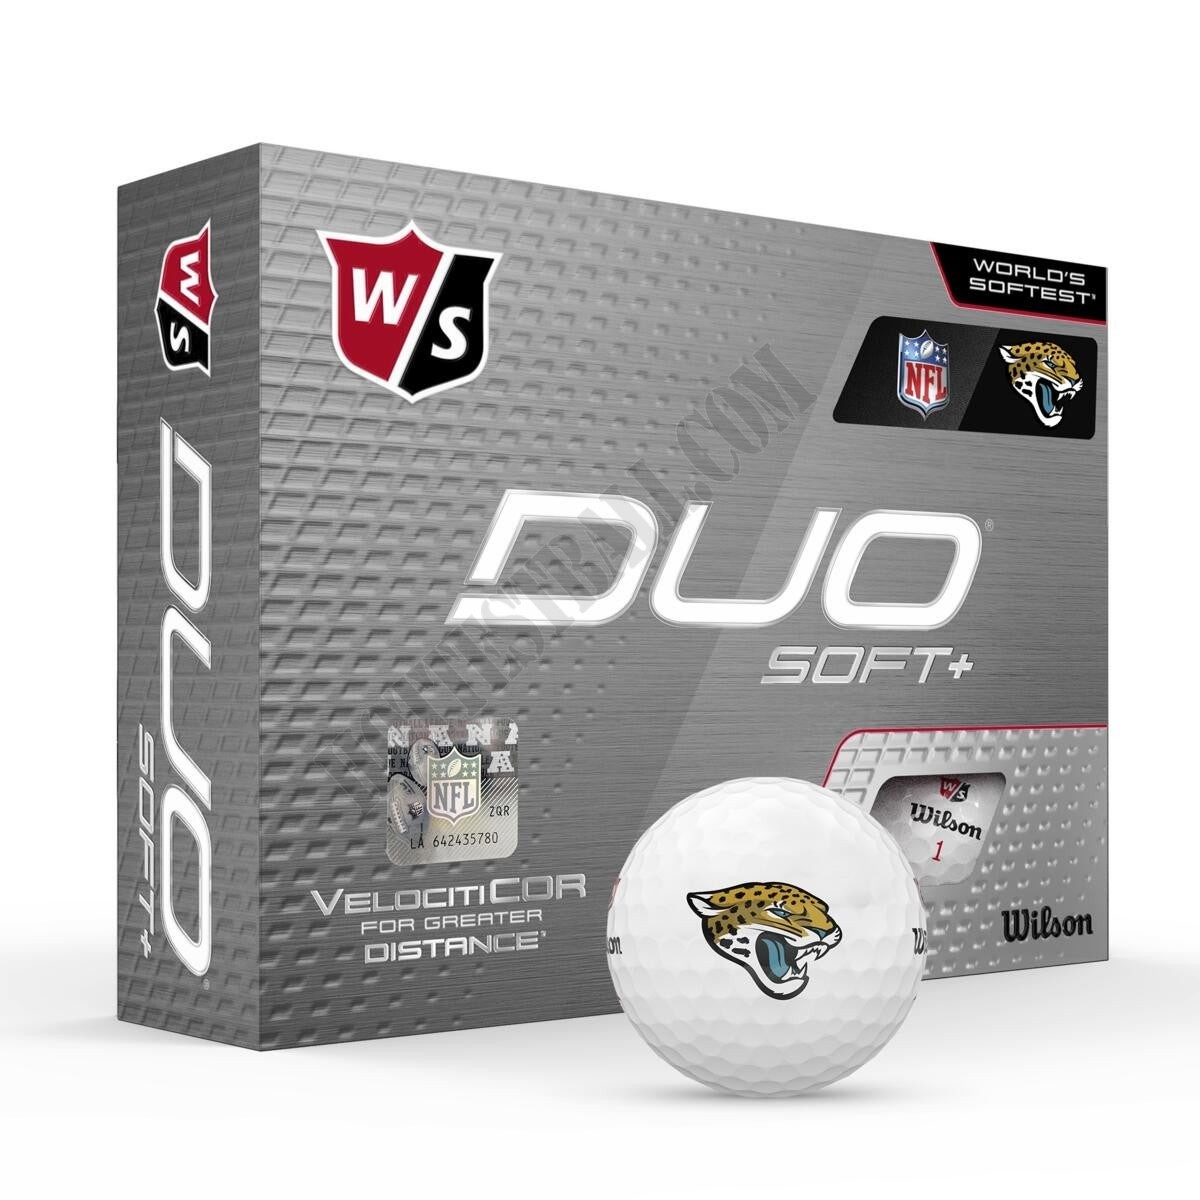 Duo Soft+ NFL Golf Balls - Jacksonville Jaguars ● Wilson Promotions - Duo Soft+ NFL Golf Balls - Jacksonville Jaguars ● Wilson Promotions